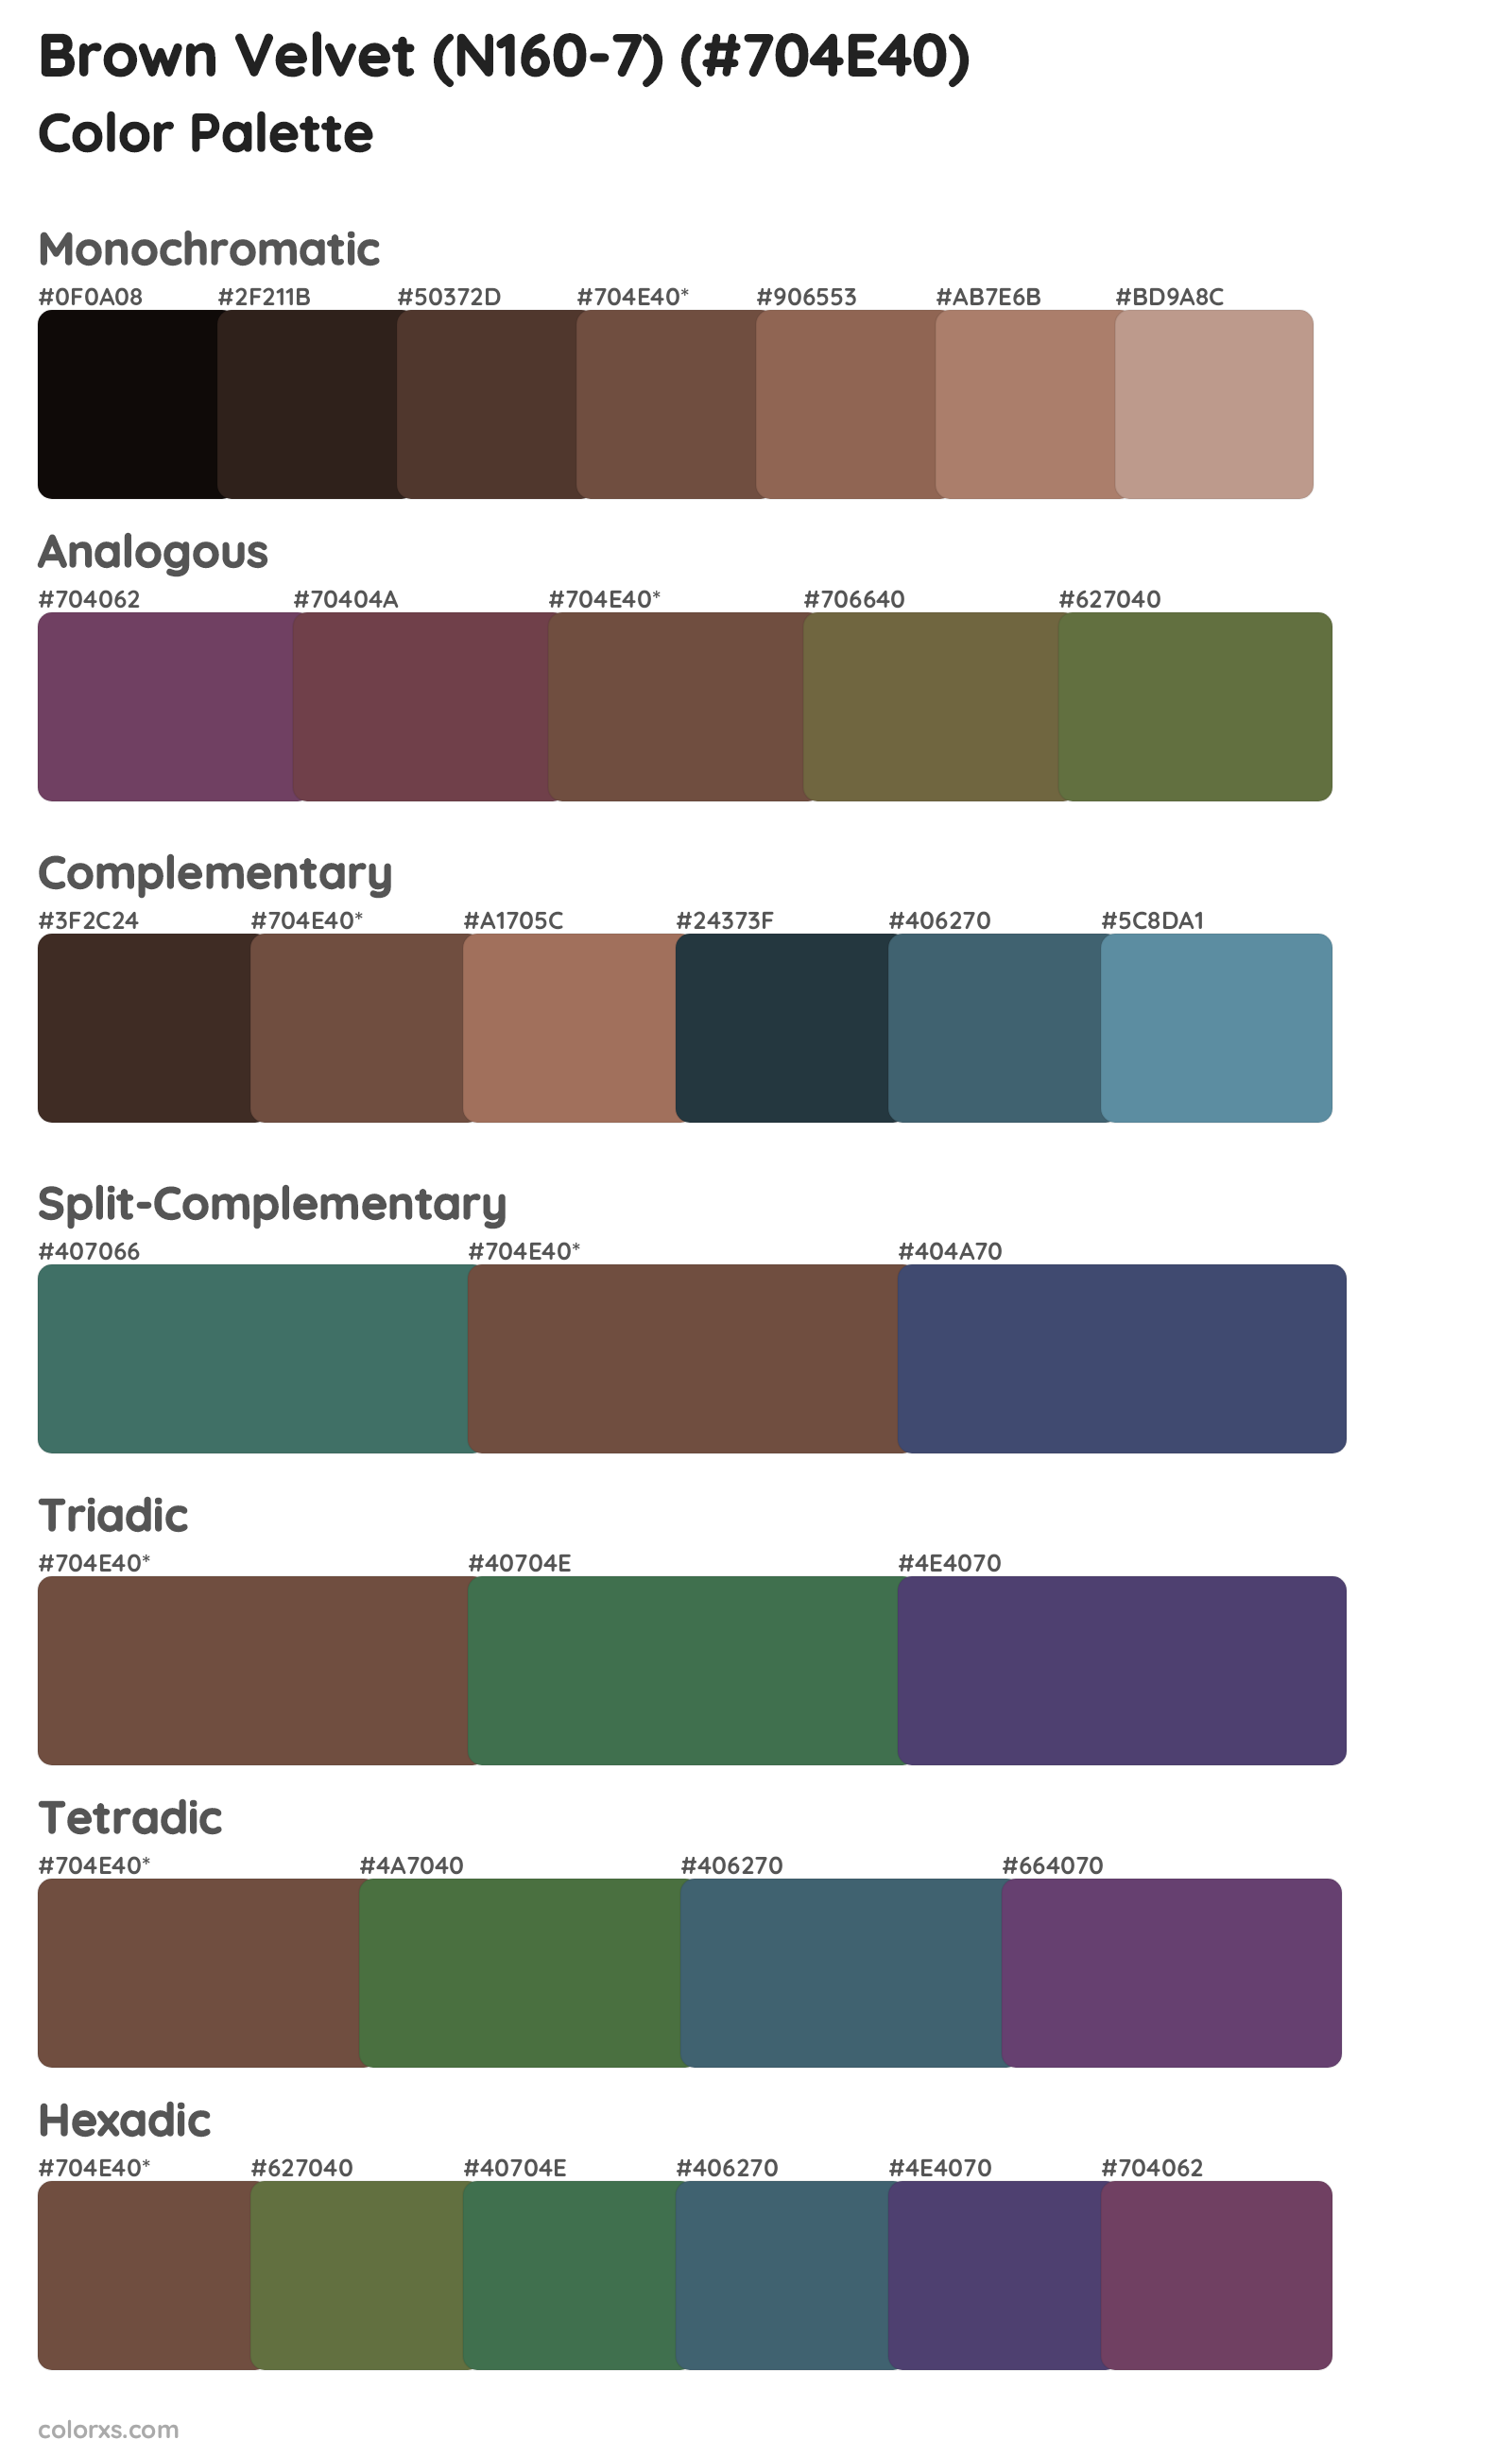 Brown Velvet (N160-7) Color Scheme Palettes